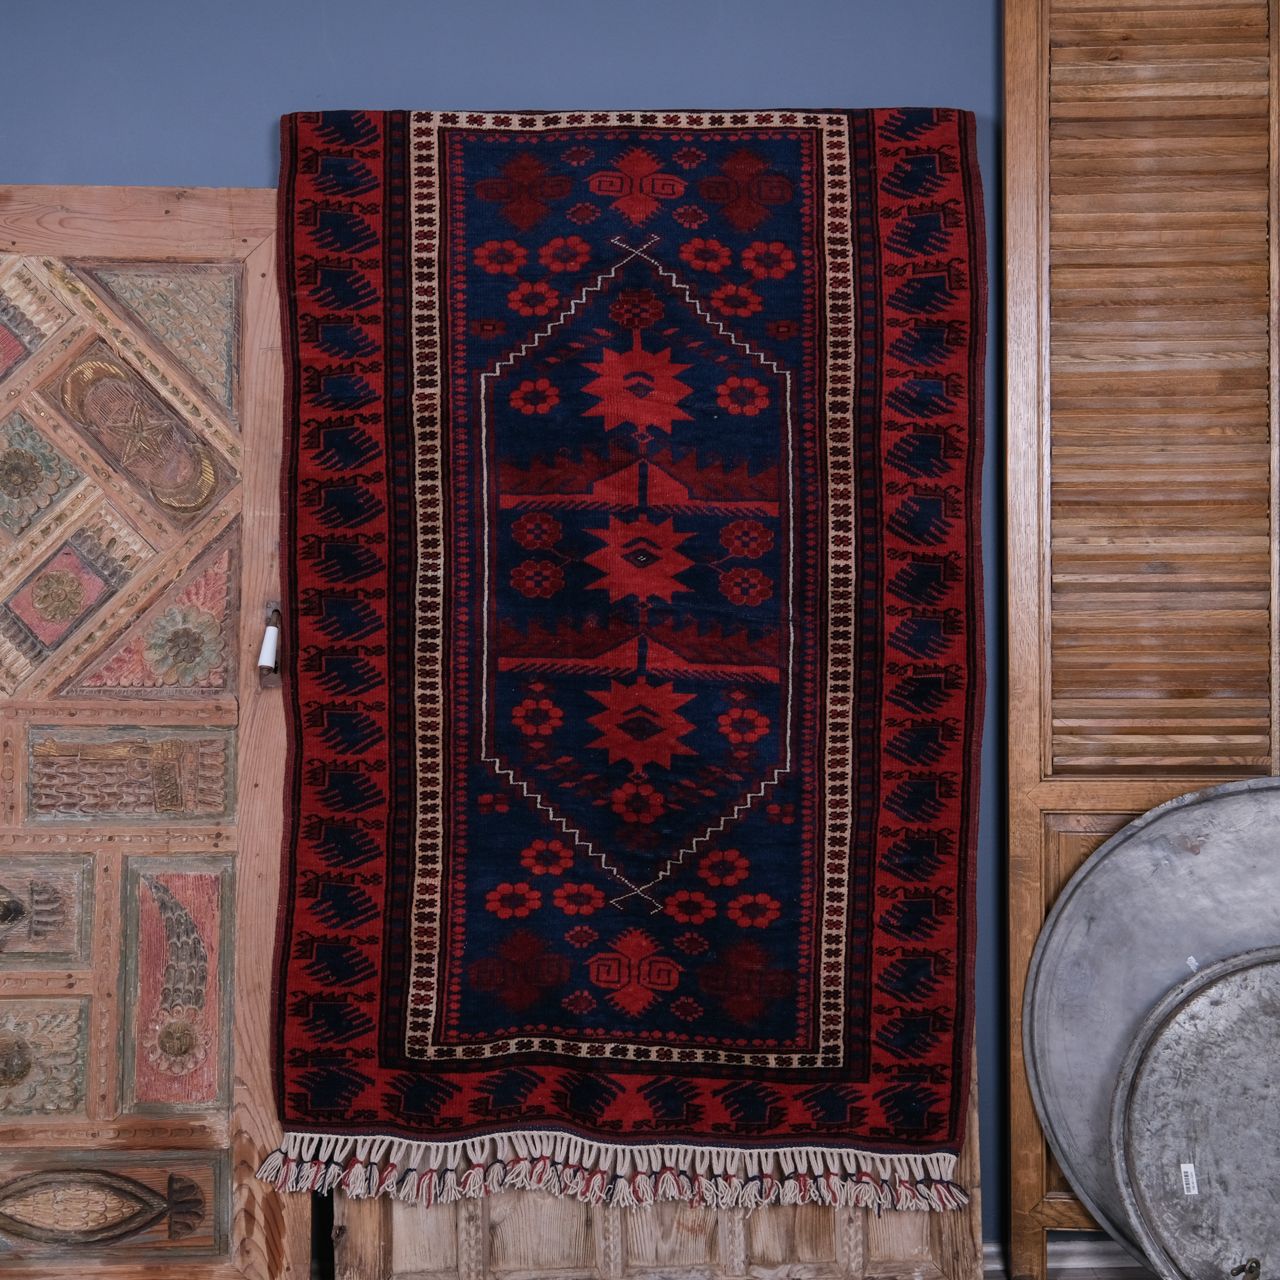 Hand Woven Carpet,Vintage Rug,Retro Carpet,Wool Carpet